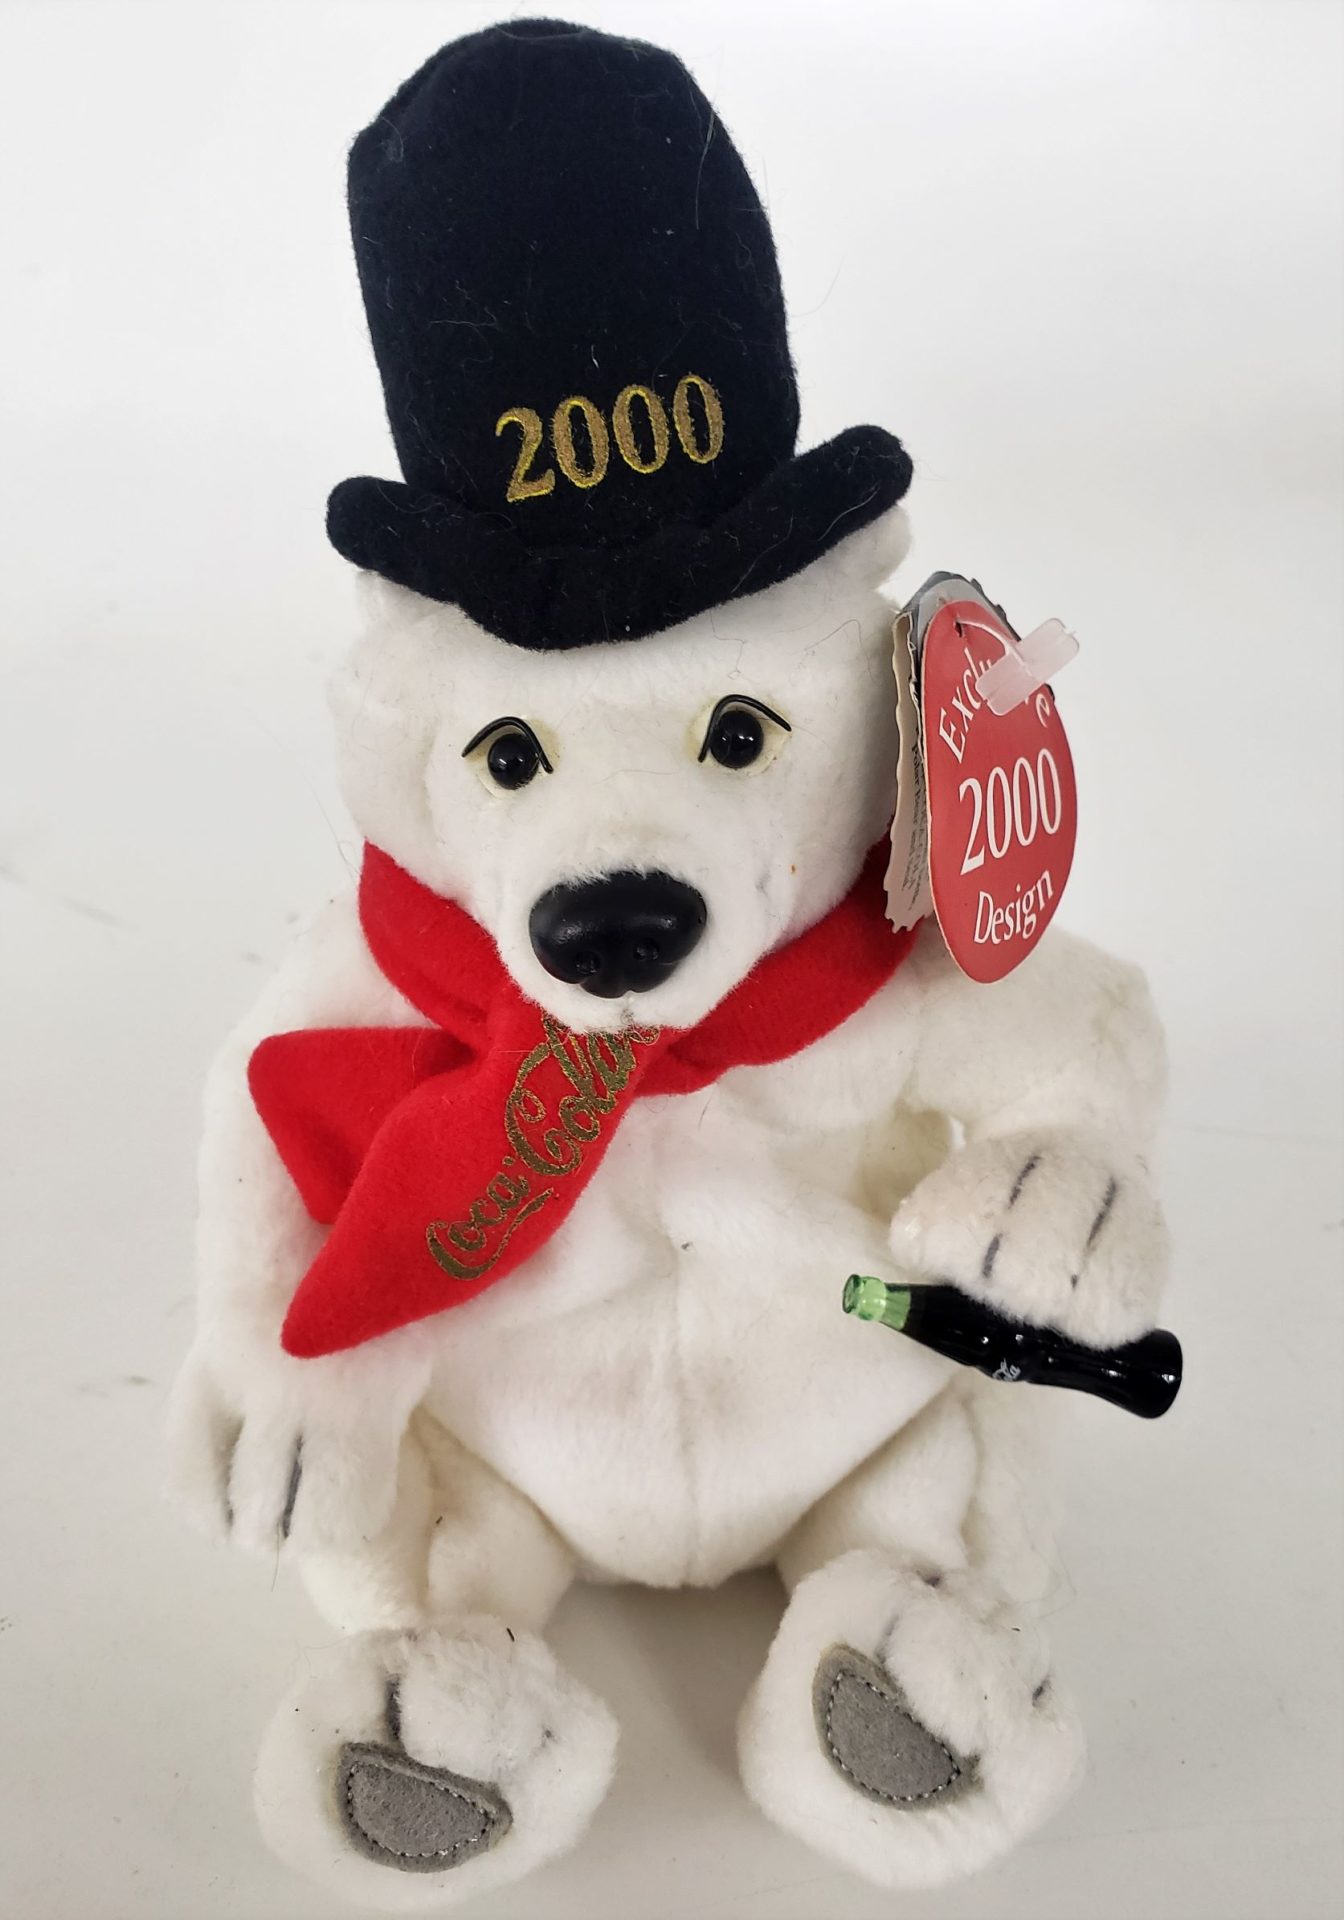 Coca-Cola Polar Bear Bean Bag Plush 2000 Limited Edition 0277 - Nokomis ...